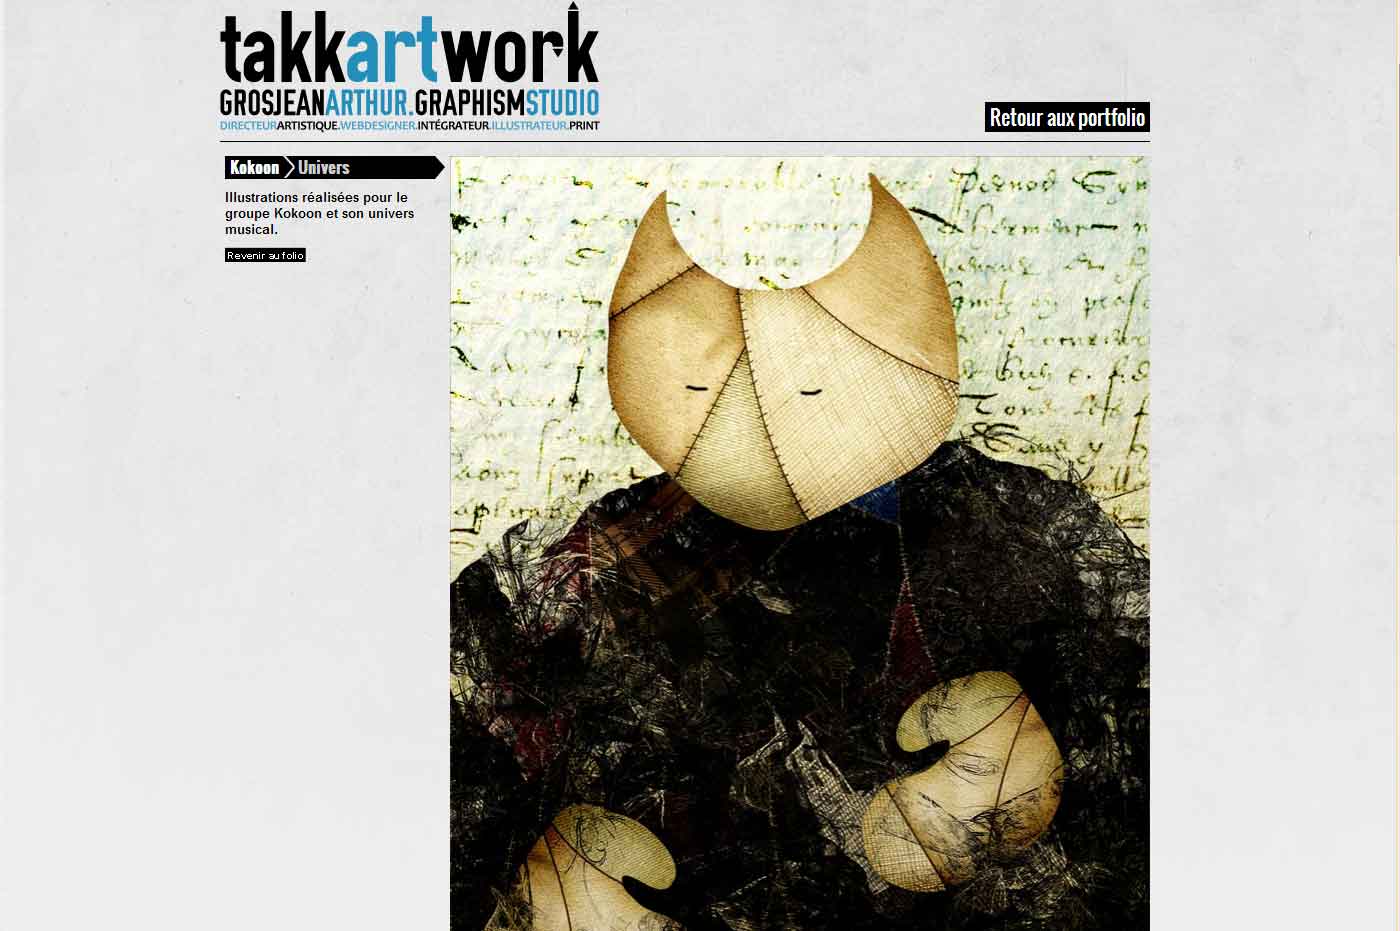 takkart-work